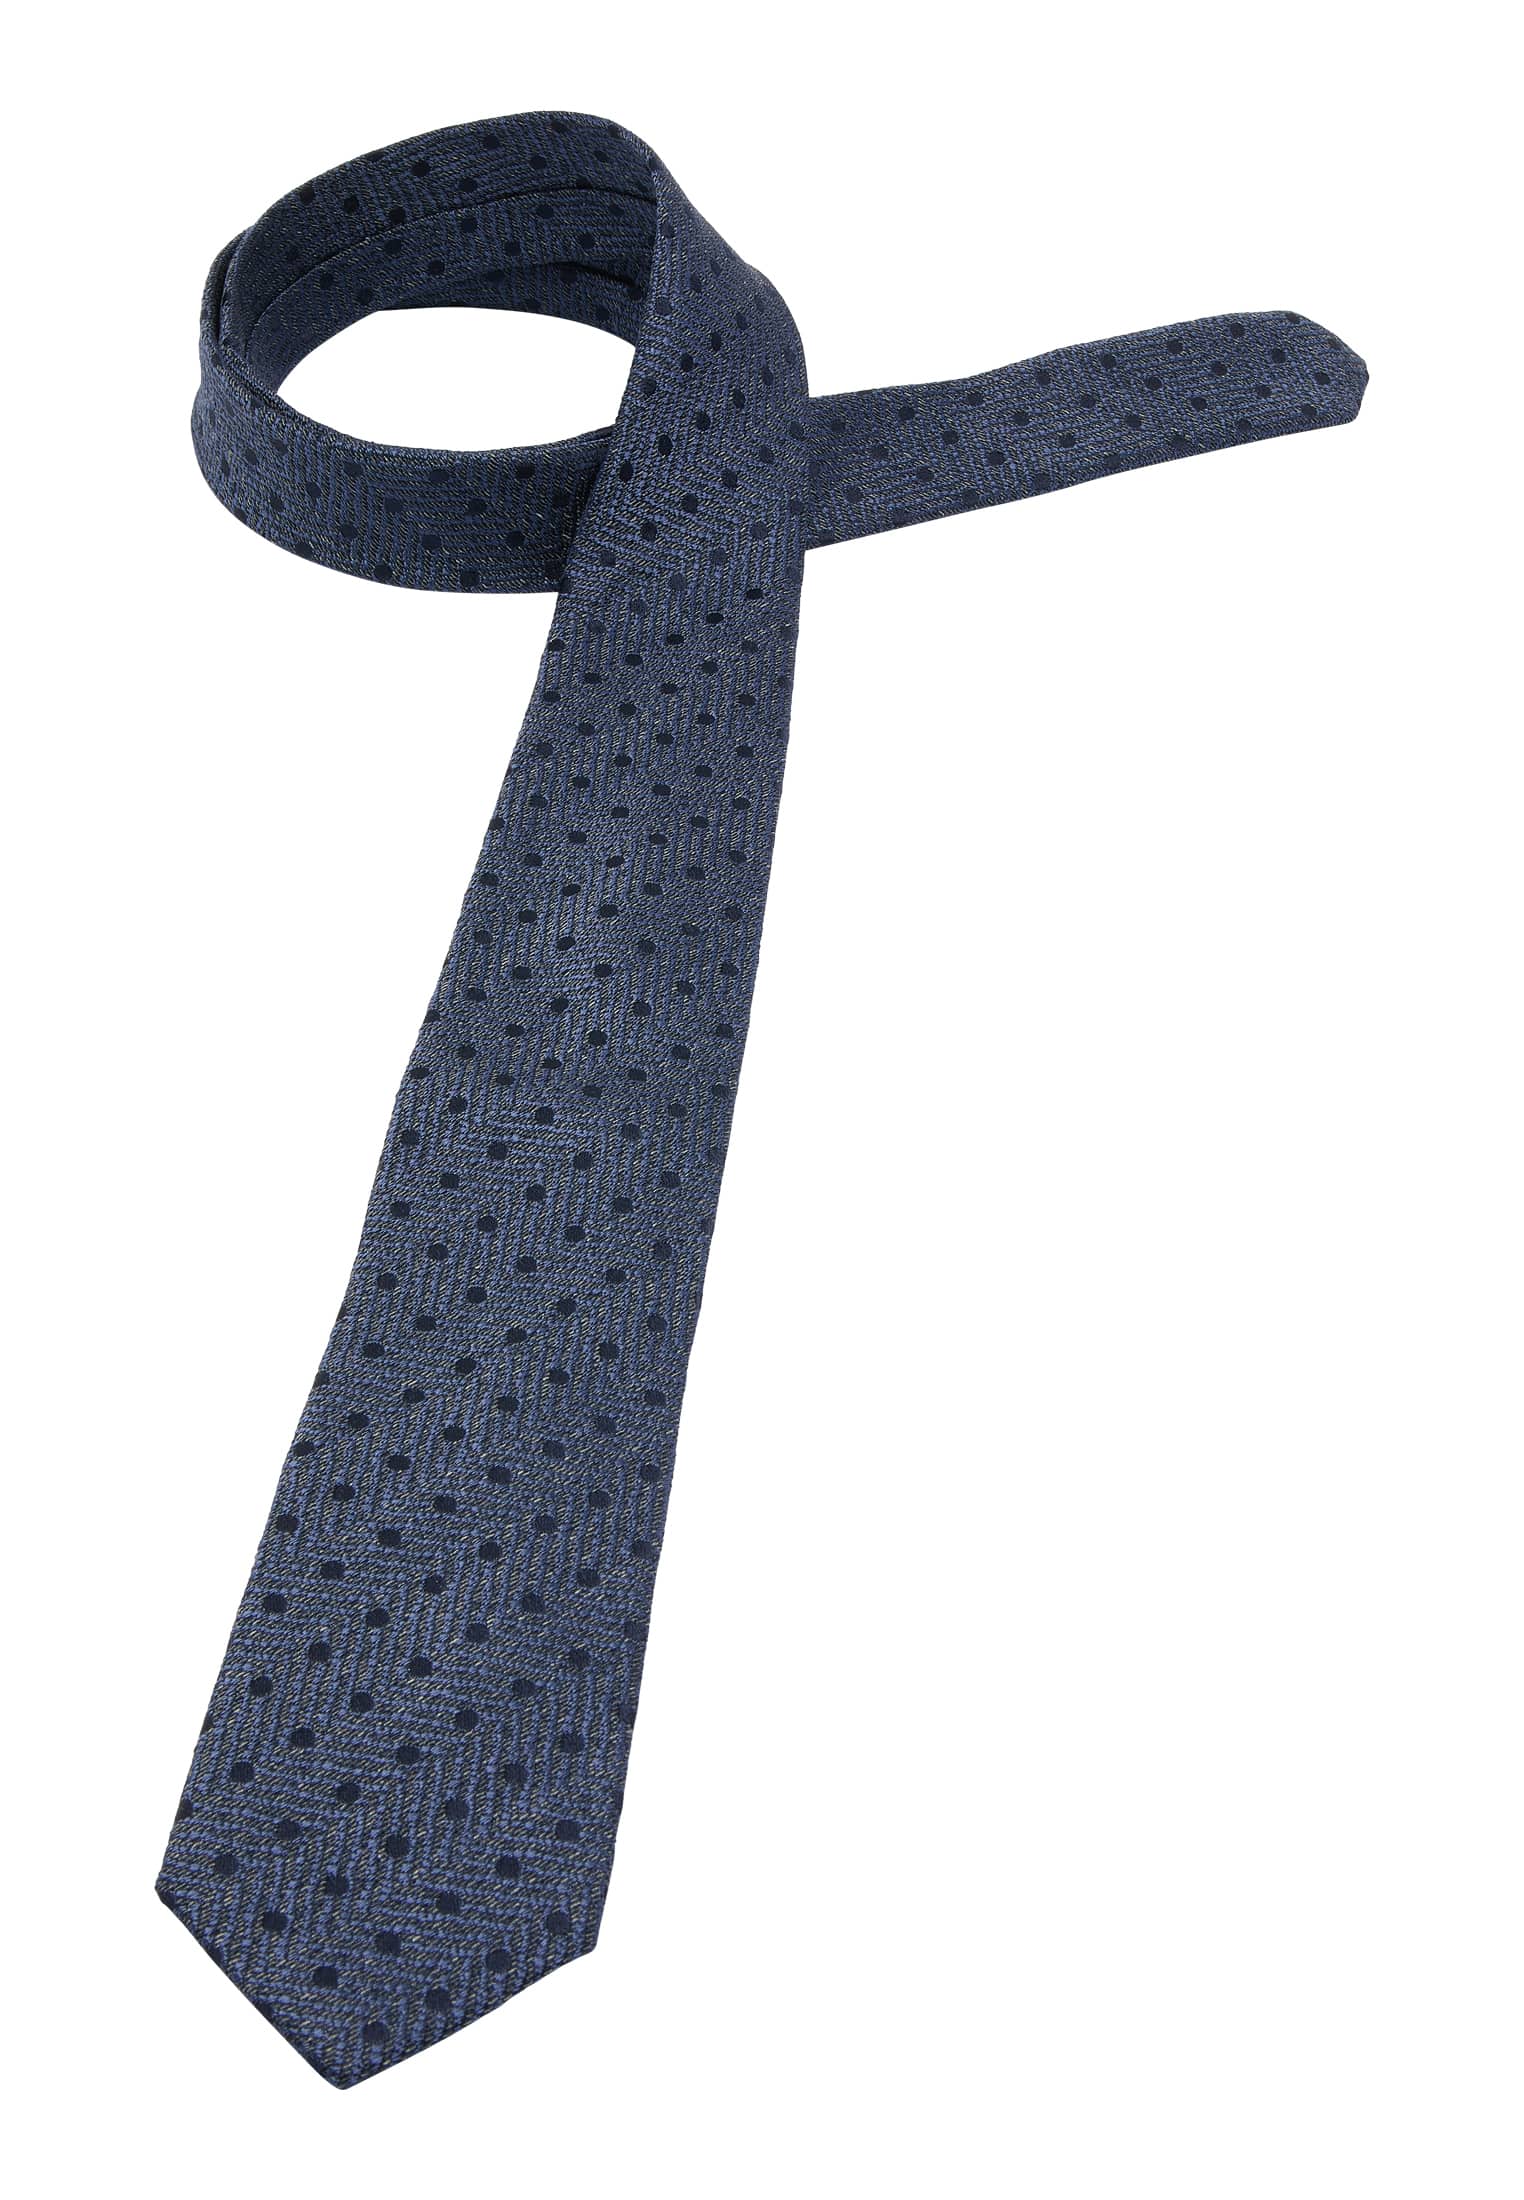 Krawatte in dunkelblau strukturiert | dunkelblau | 142 | 1AC01933-01-81-142